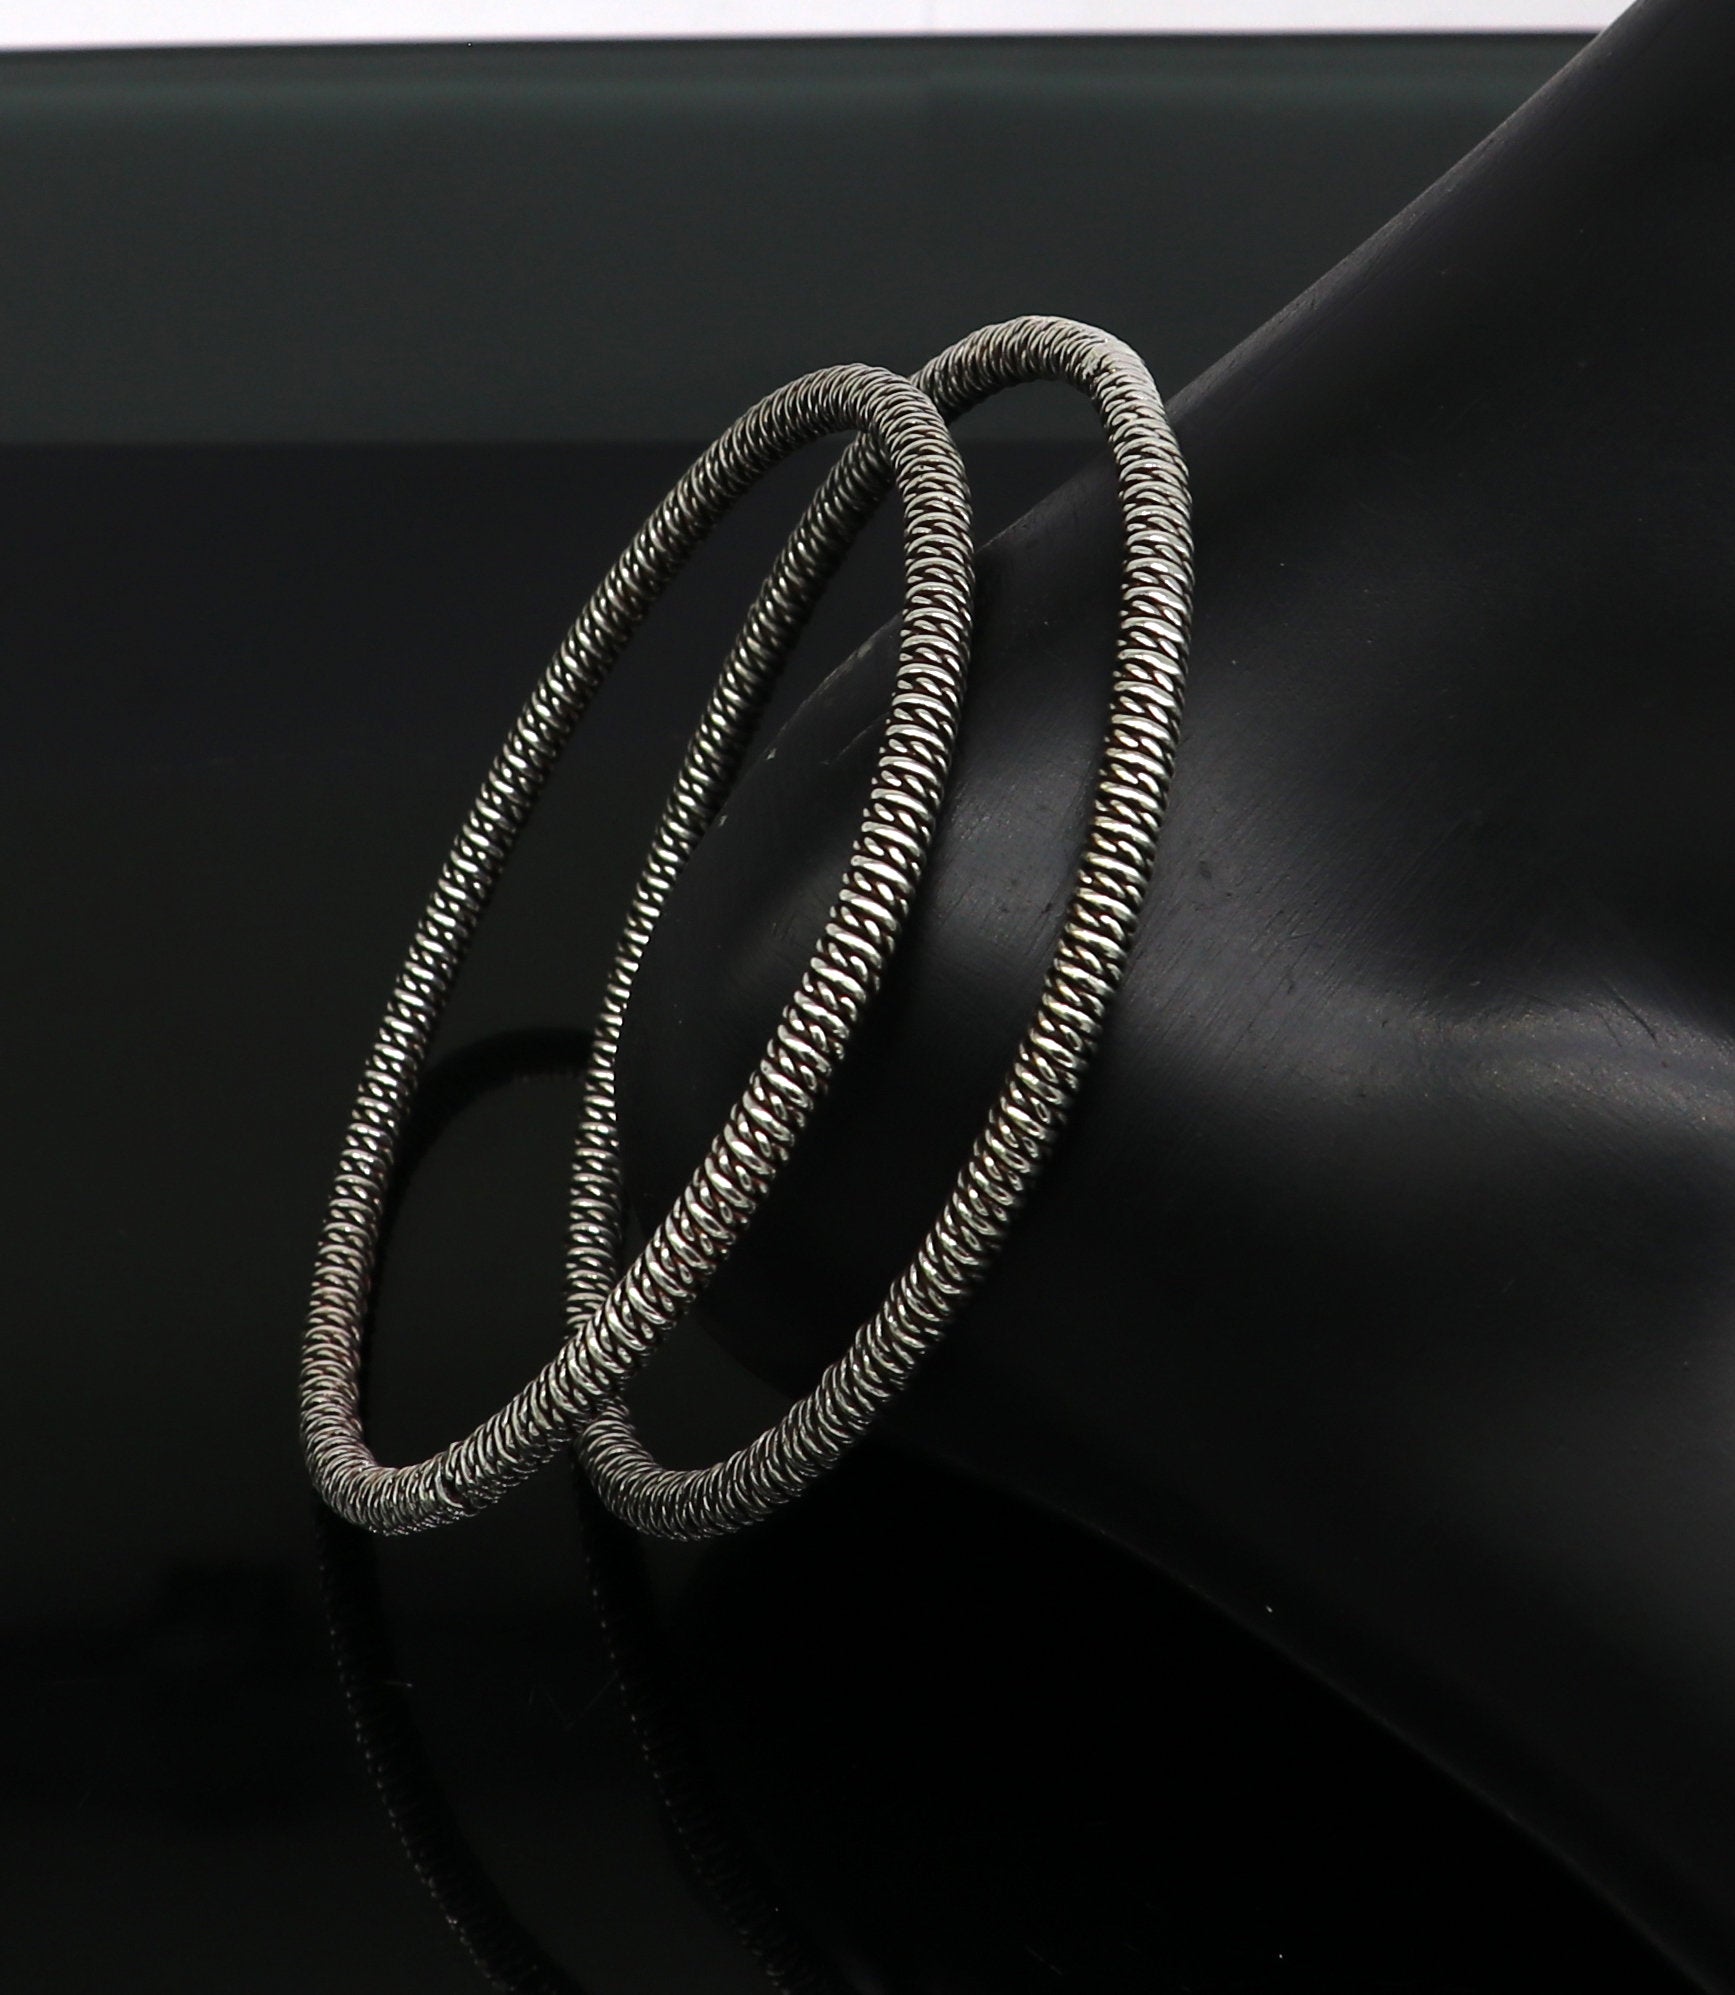 Silver Bracelet Design  य खबसरत बरसलट डजइन कर टरई आपक दग  एथनक क सथ शनदर लक  उरजचल टईगर रषटरय हनद पतरक